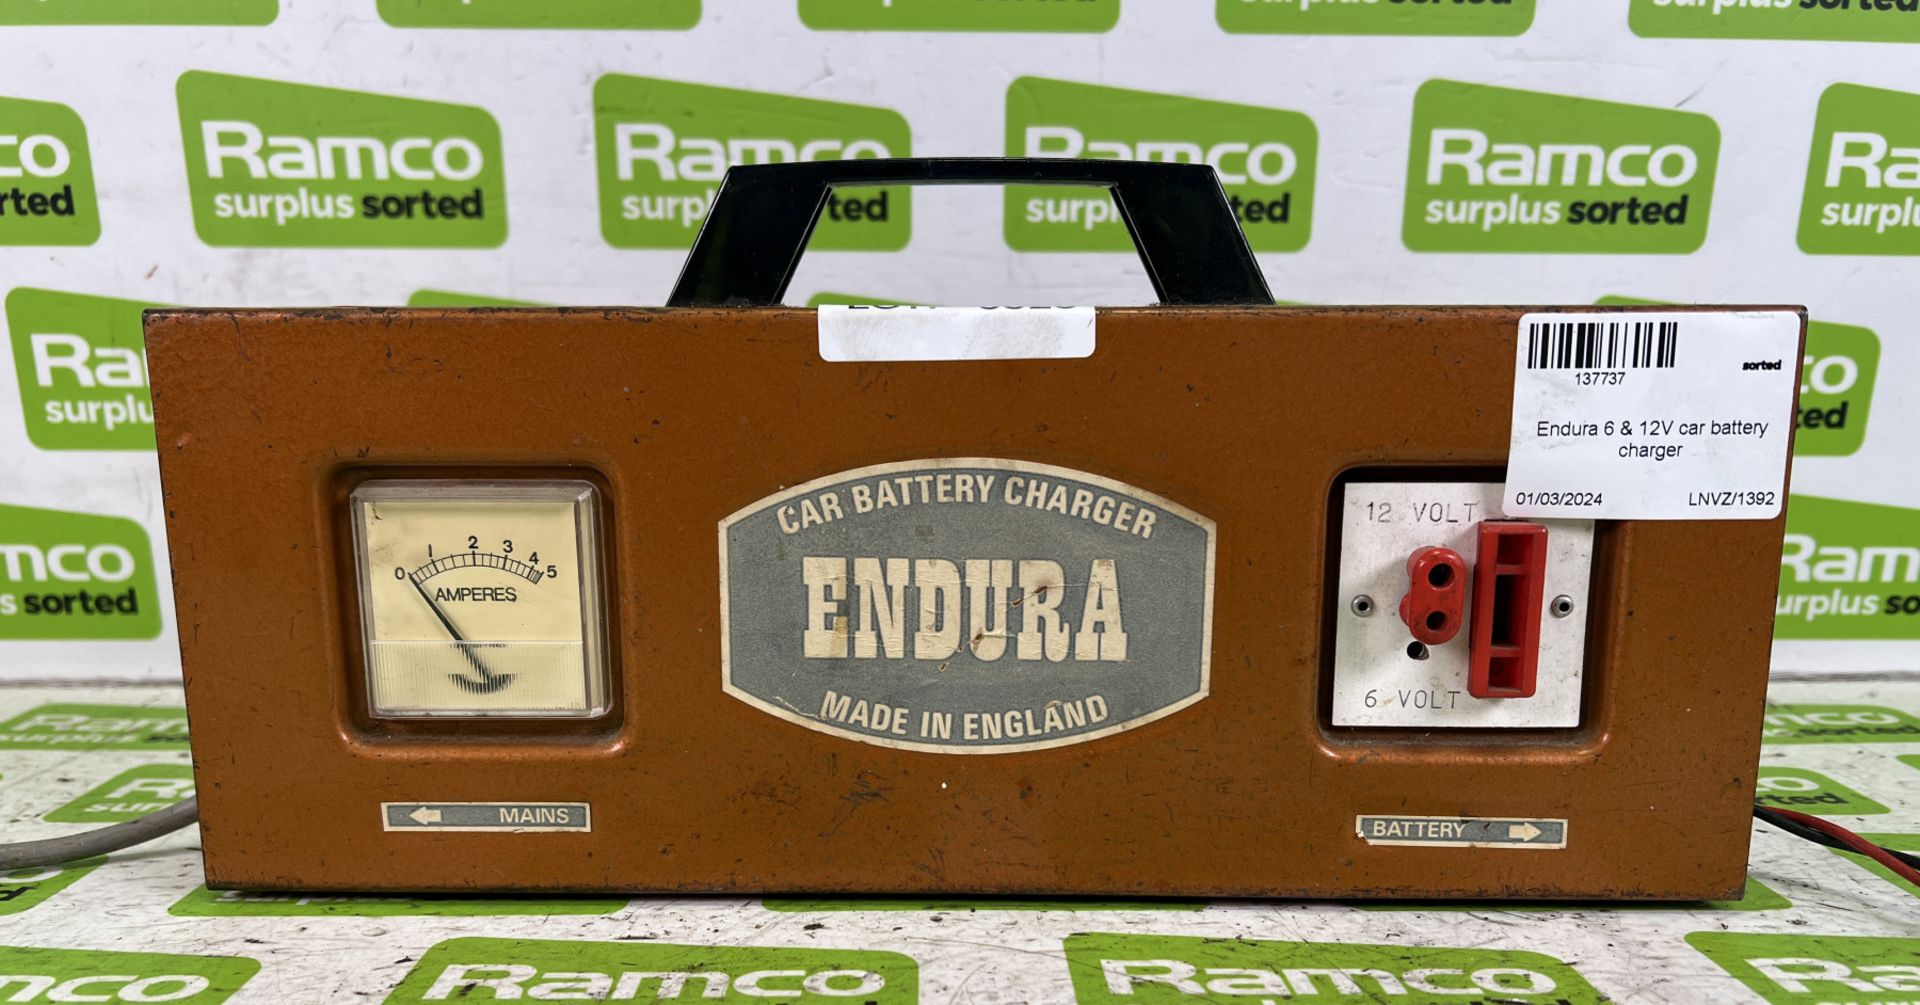 Endura 6 & 12V car battery charger - Image 2 of 3